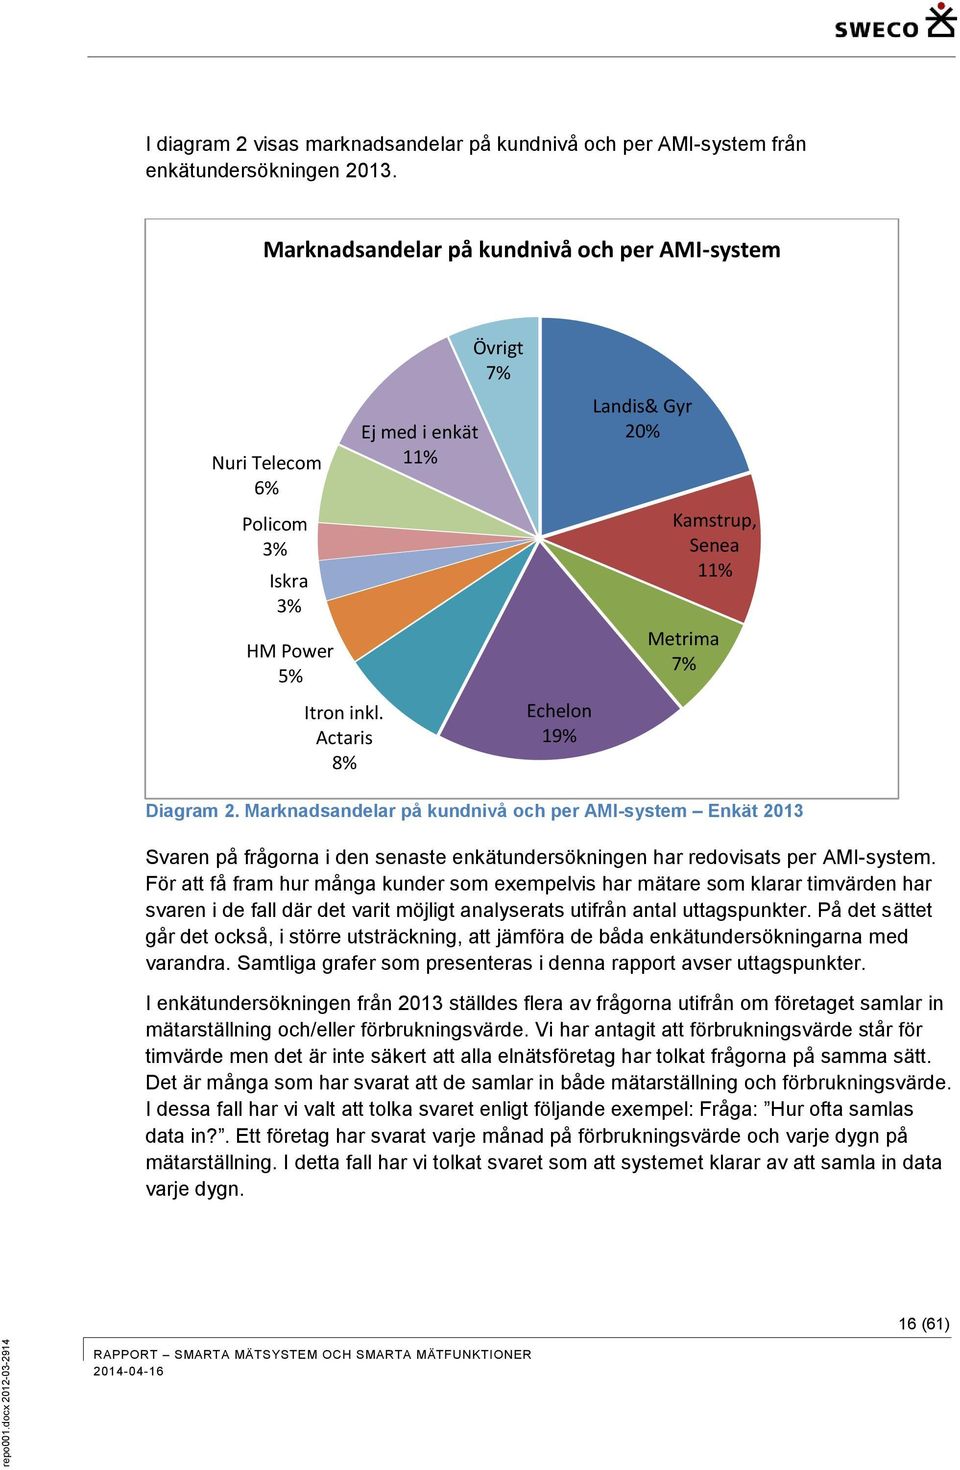 Actaris 8% Ej med i enkät 11% Övrigt 7% Echelon 19% Landis& Gyr 20% Kamstrup, Senea 11% Metrima 7% Diagram 2.